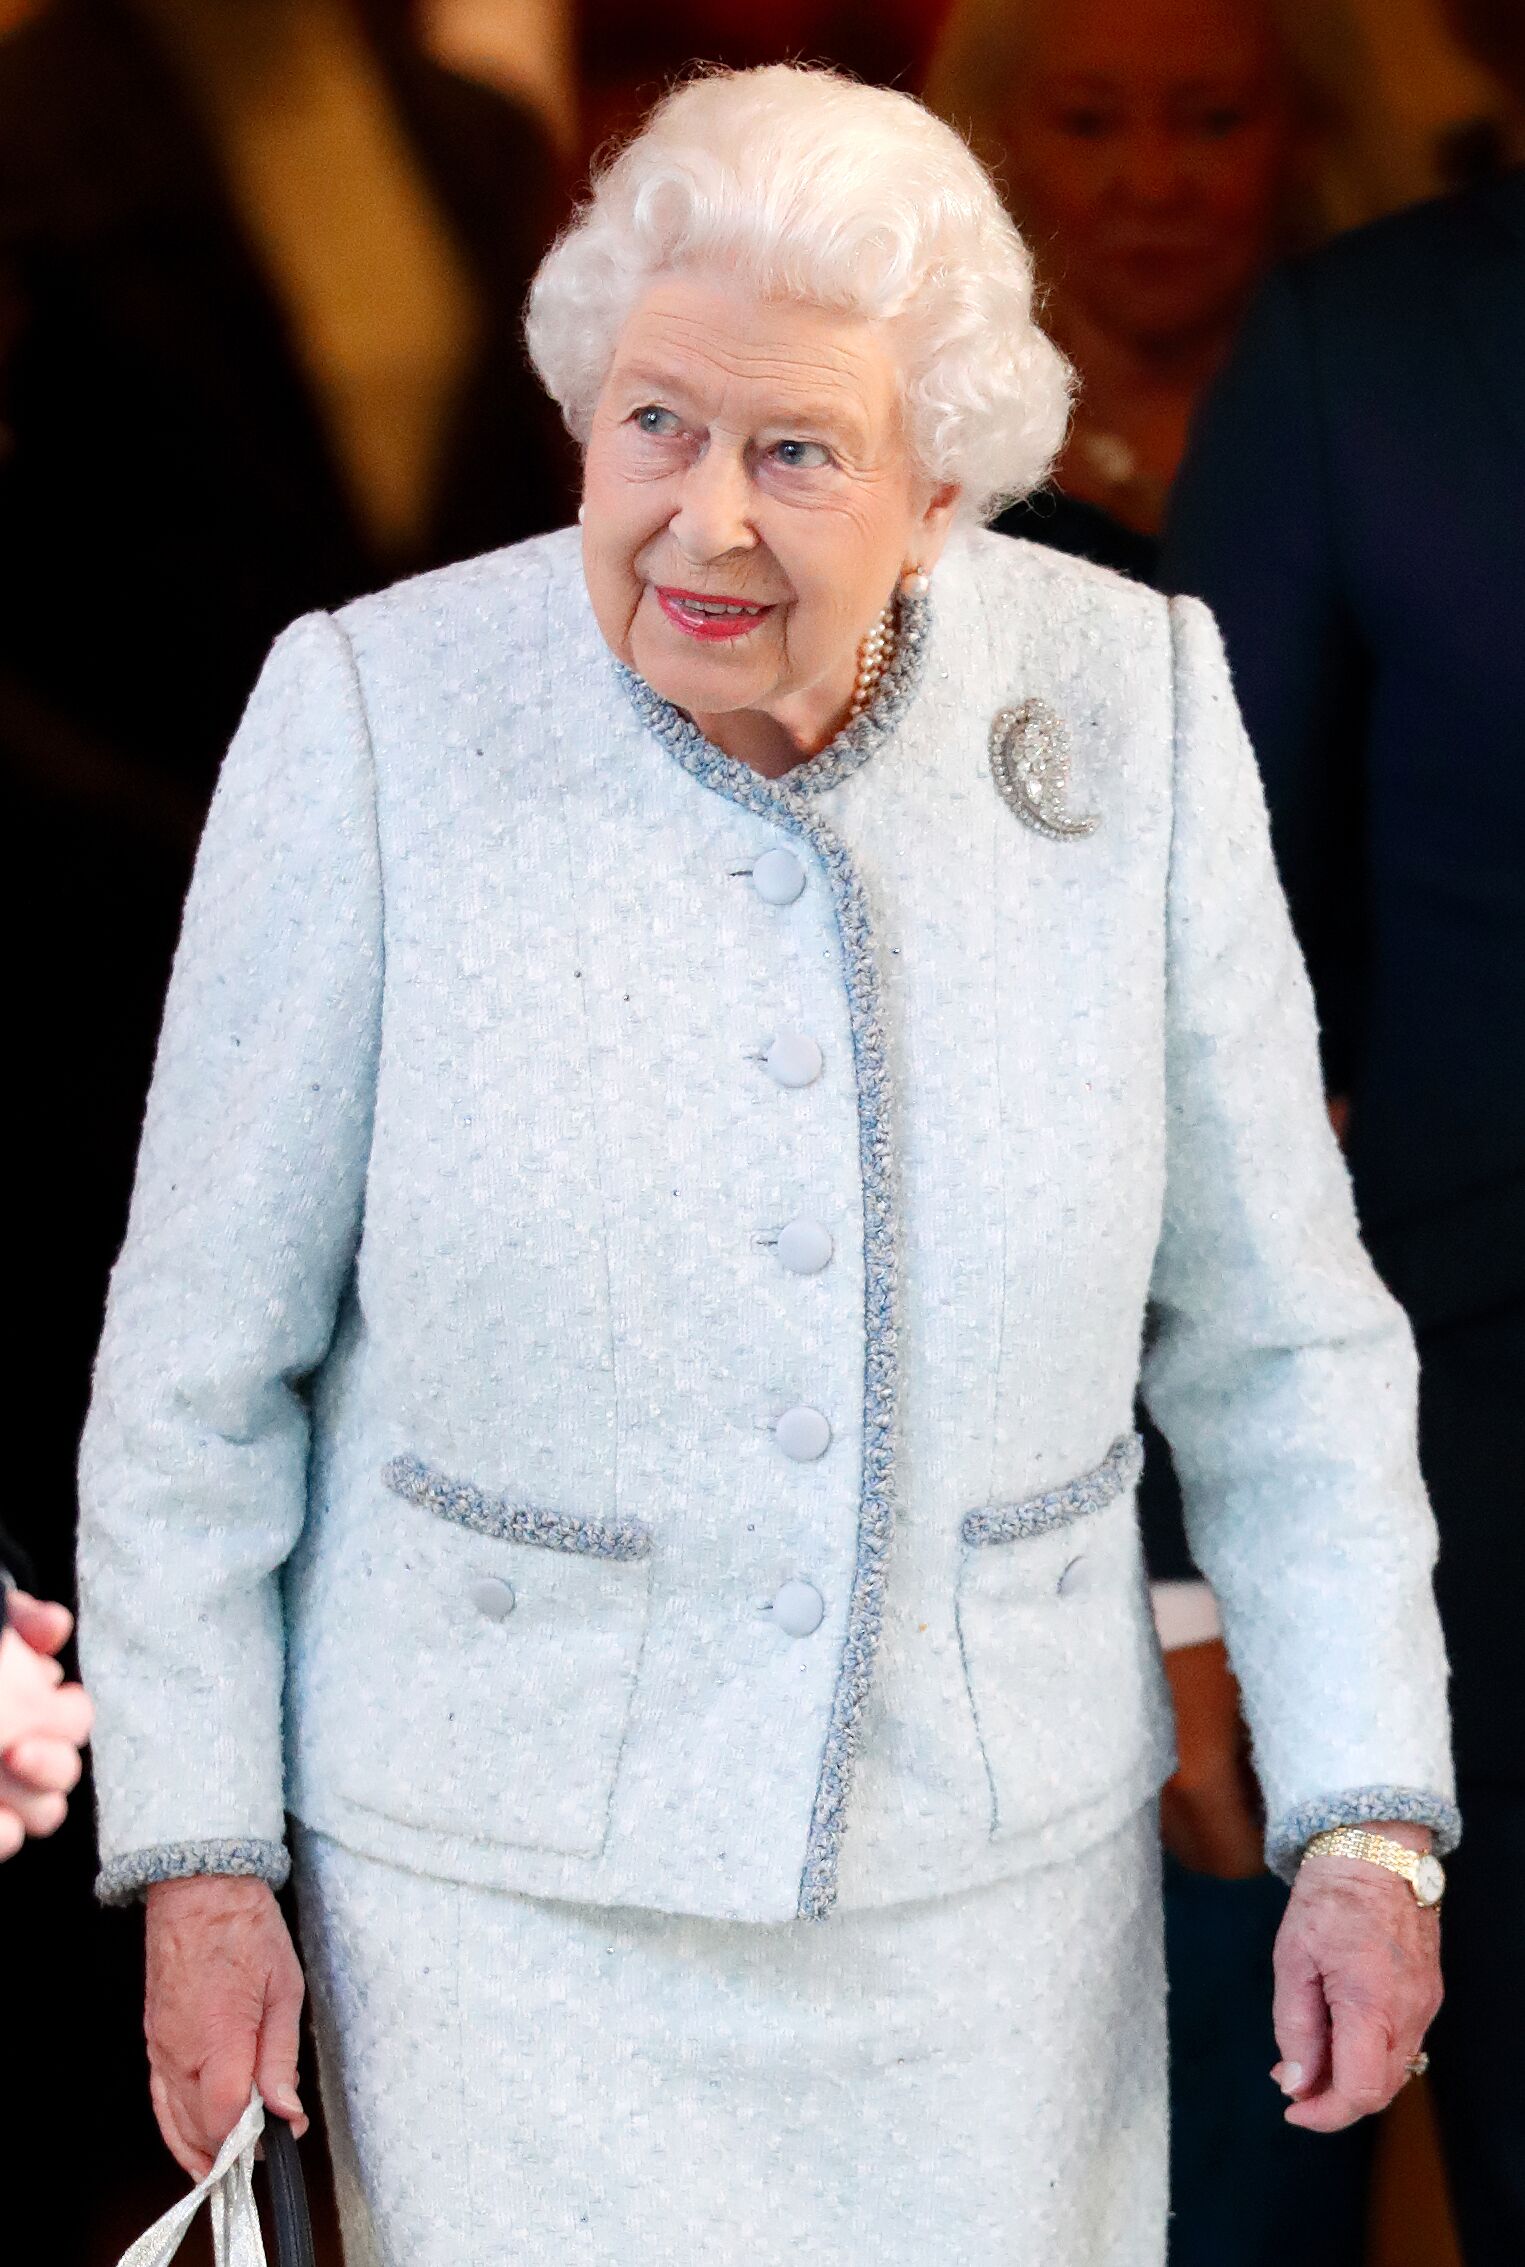 La reina Isabel II en un almuerzo de Navidad el 11 de diciembre de 2018, en Londres, Inglaterra. | Foto: Getty Images